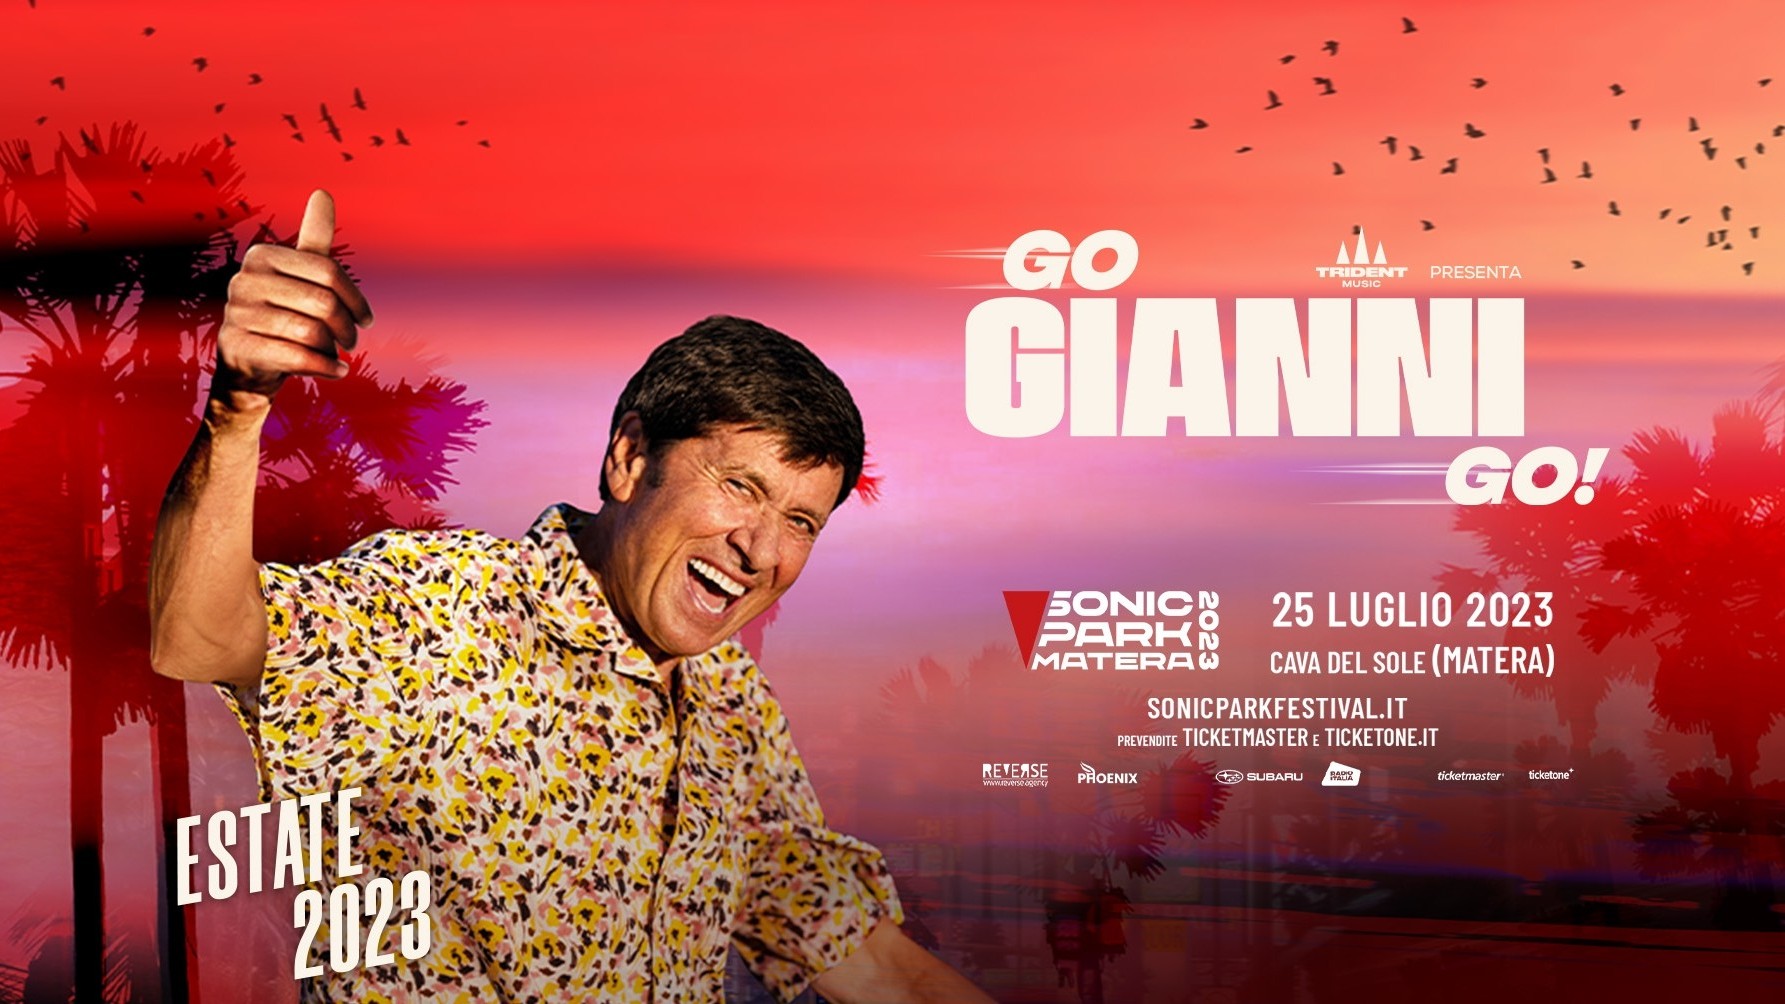 Gianni Morandi - "Go Gianni Go!"